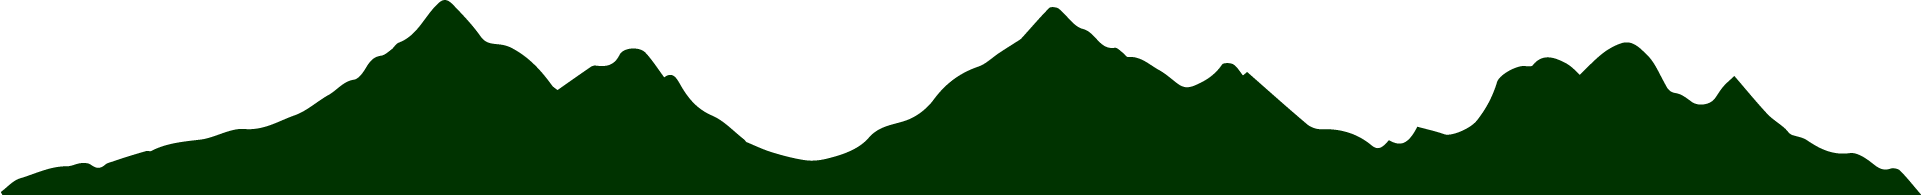 green_mountain